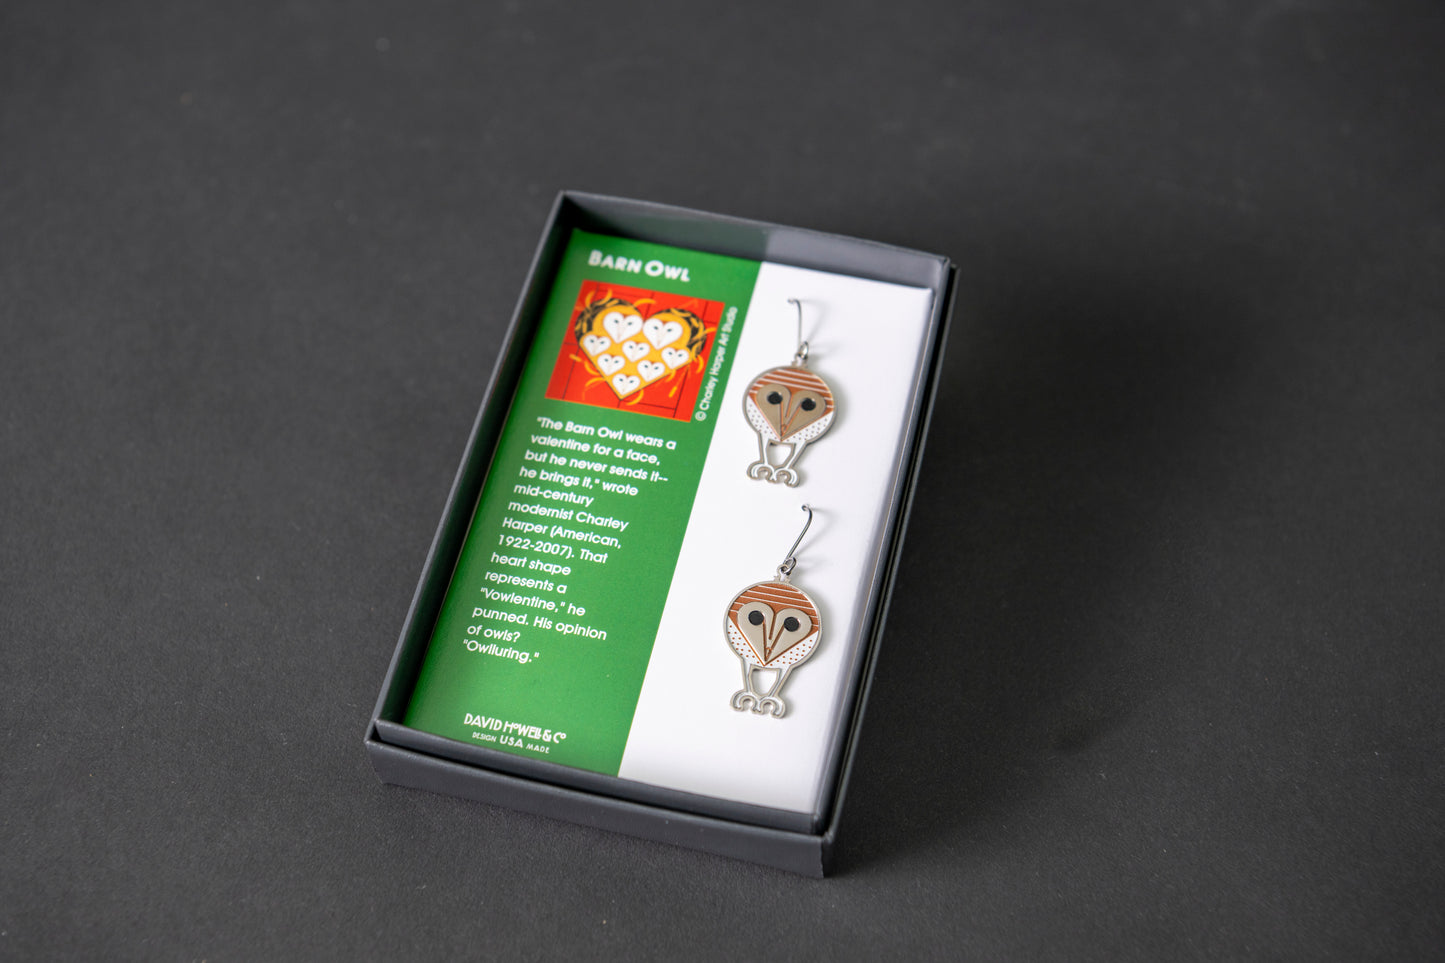 Barn Owl Earrings by Charley Harper from David Howell & Co.